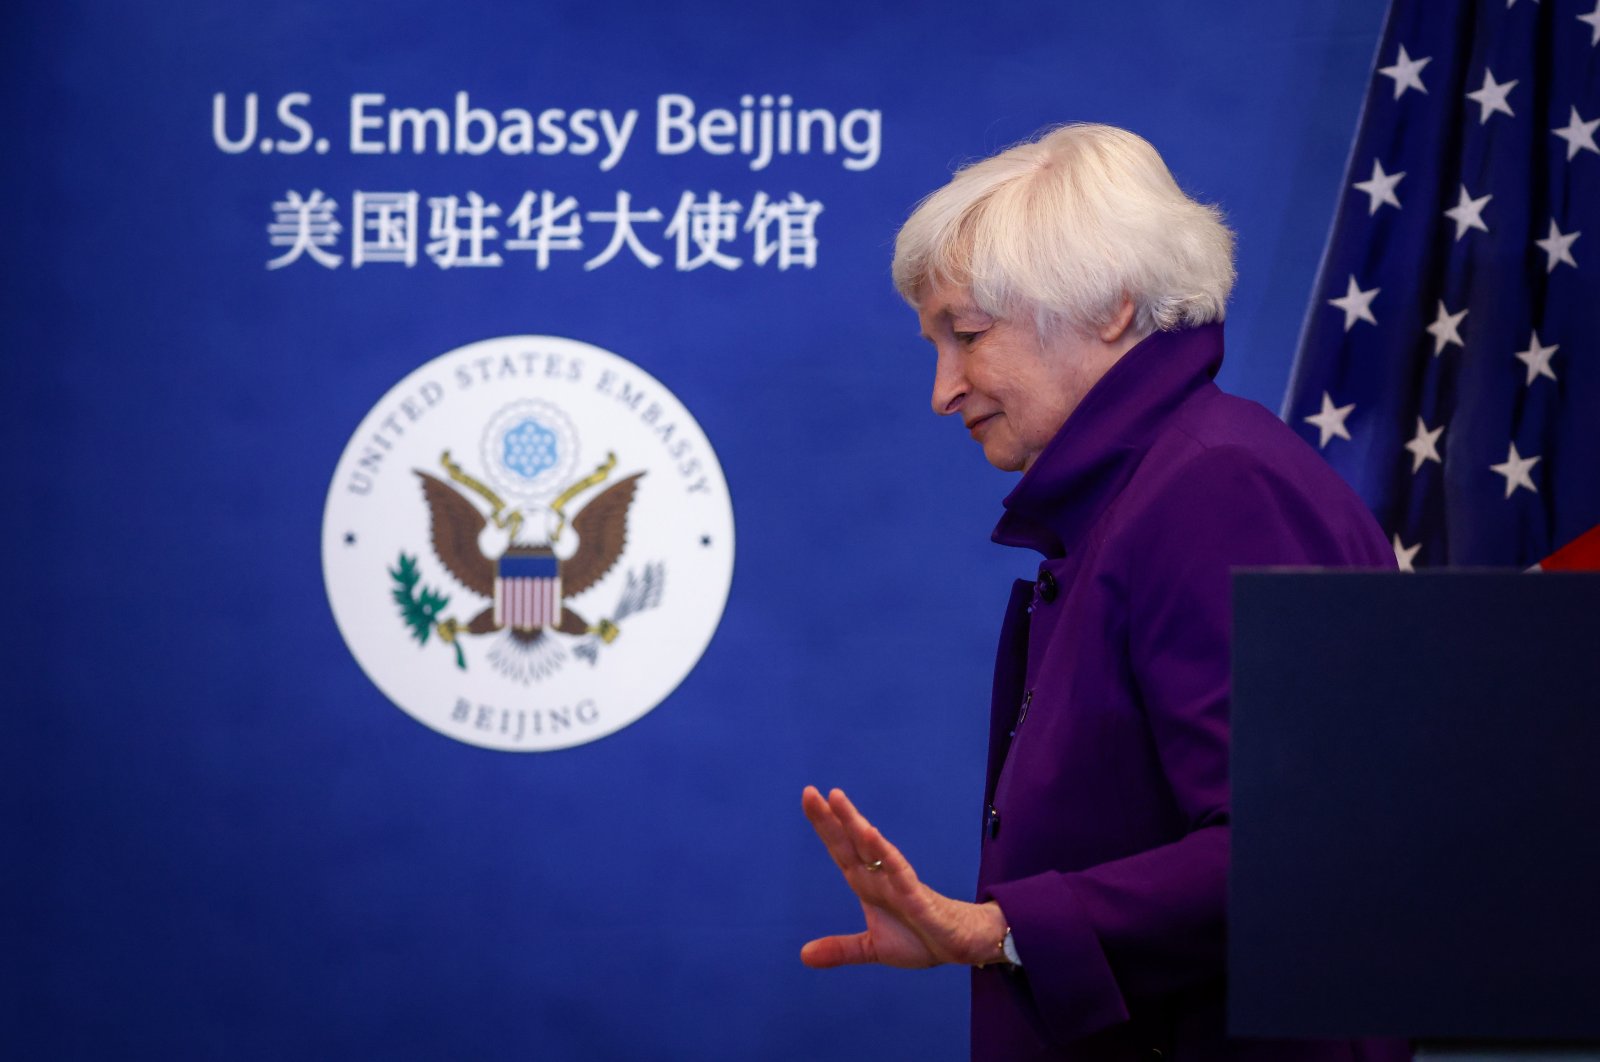 US Treasury’s Yellen sees ‘progress’ in rocky US-China ties